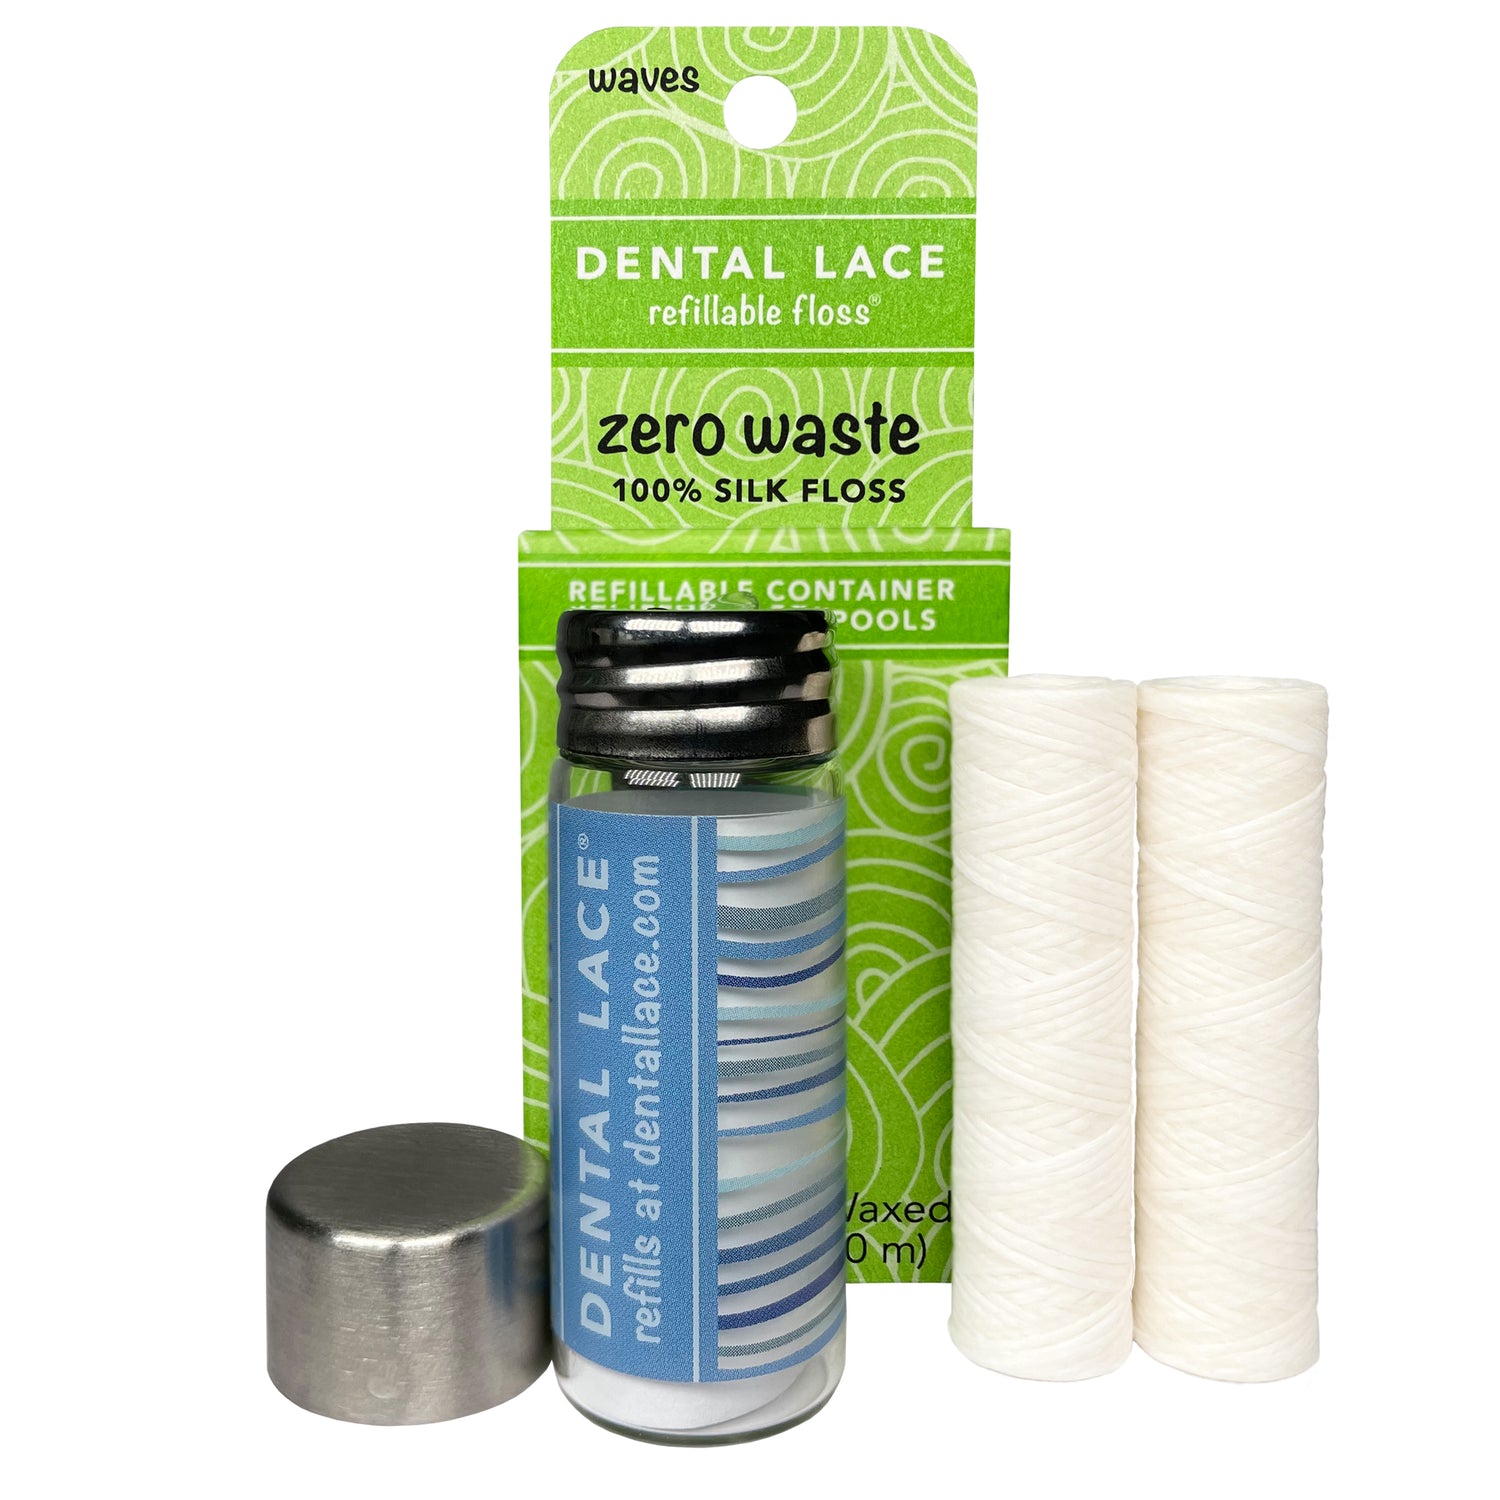 Oral care product sample bundles